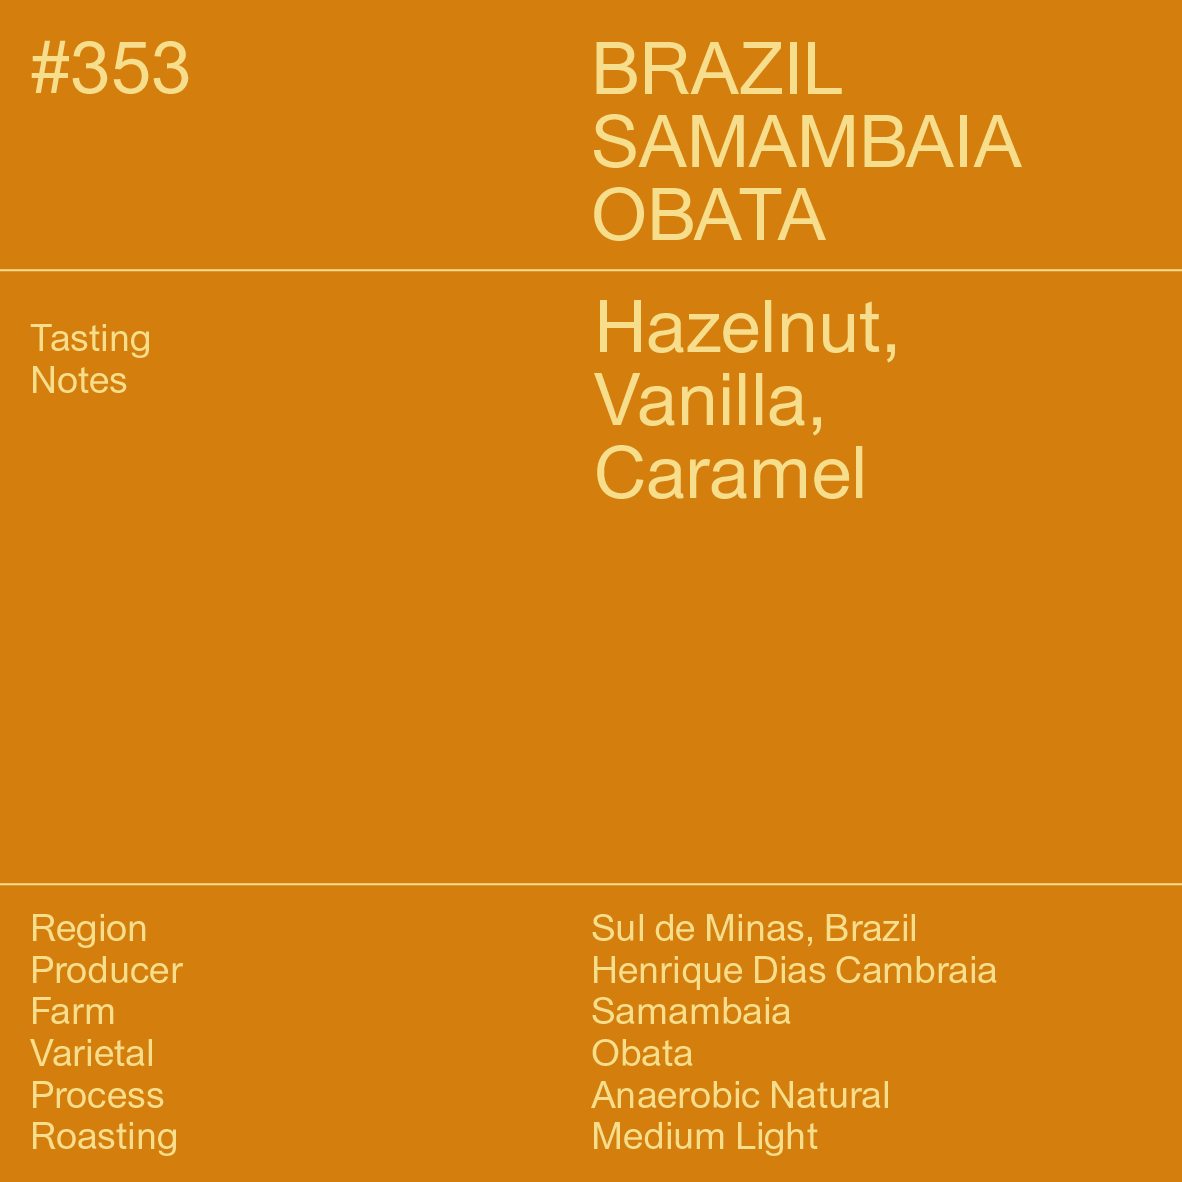 #354 Brazil Samambaia Obata | SINGLE ORIGIN MAY SERIES